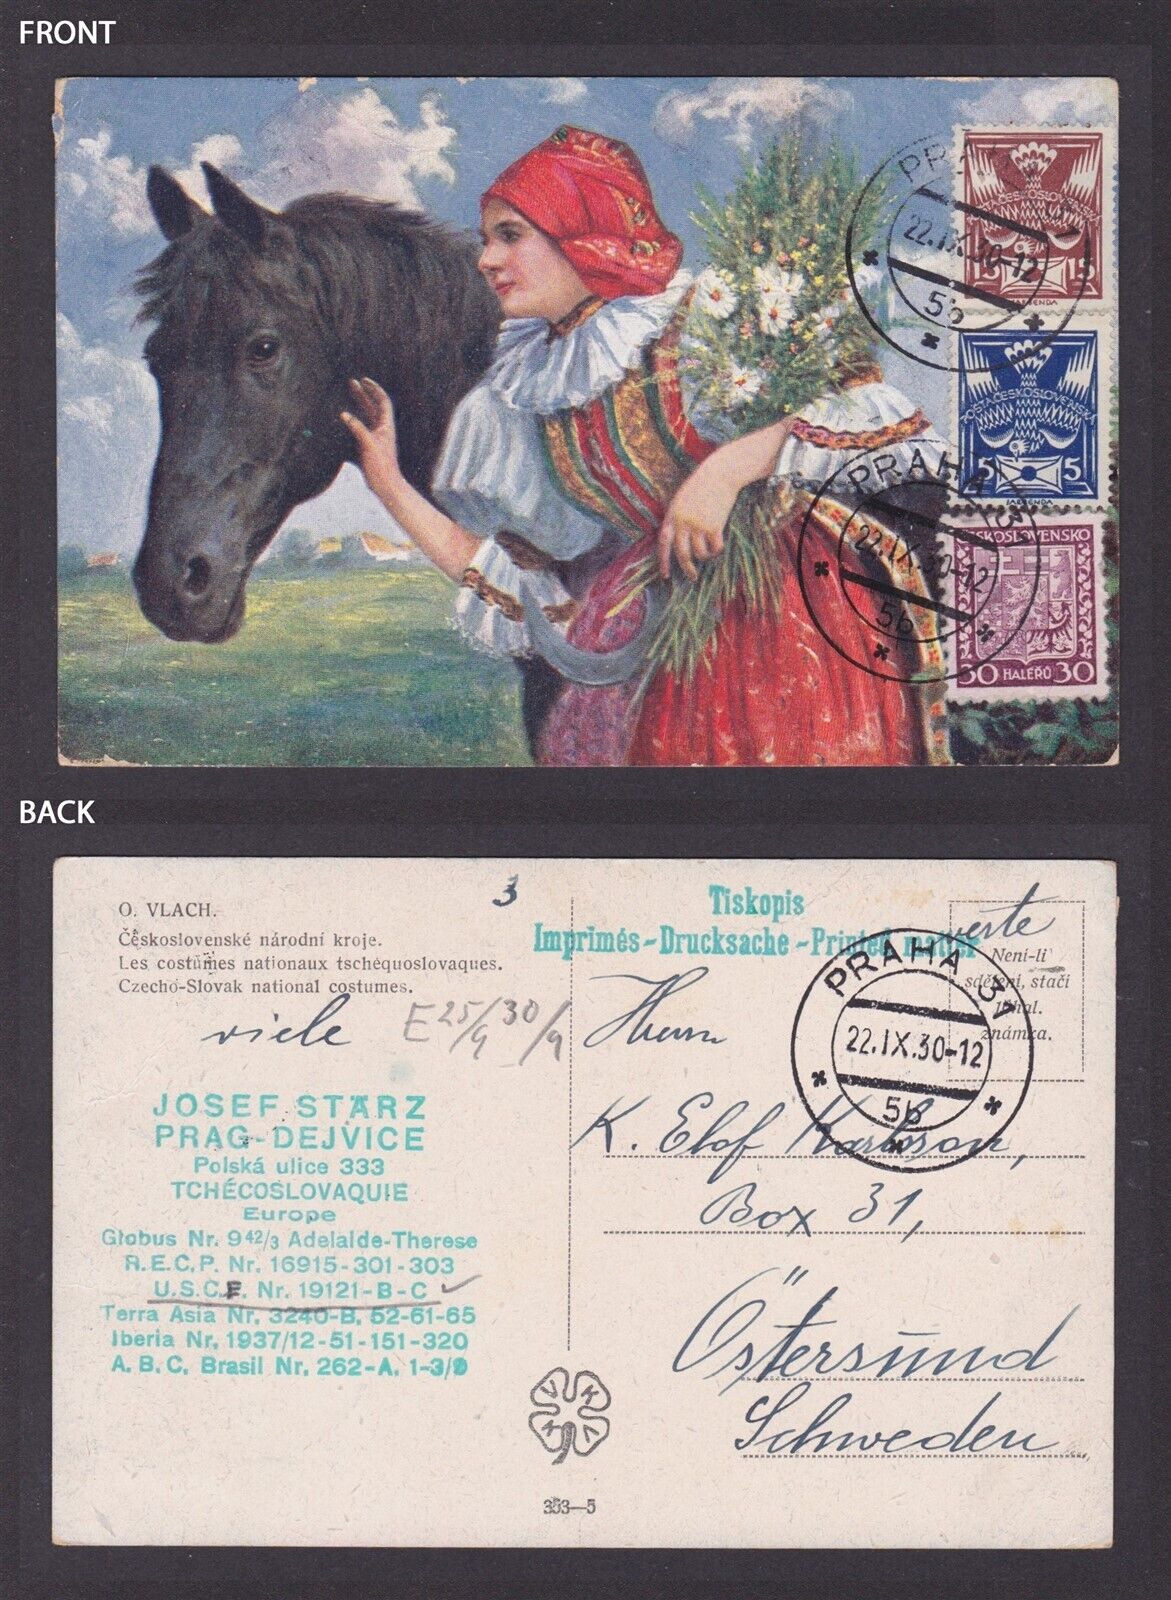 Postcard, National costume, Czechia, Czecho-Slovak national costumes